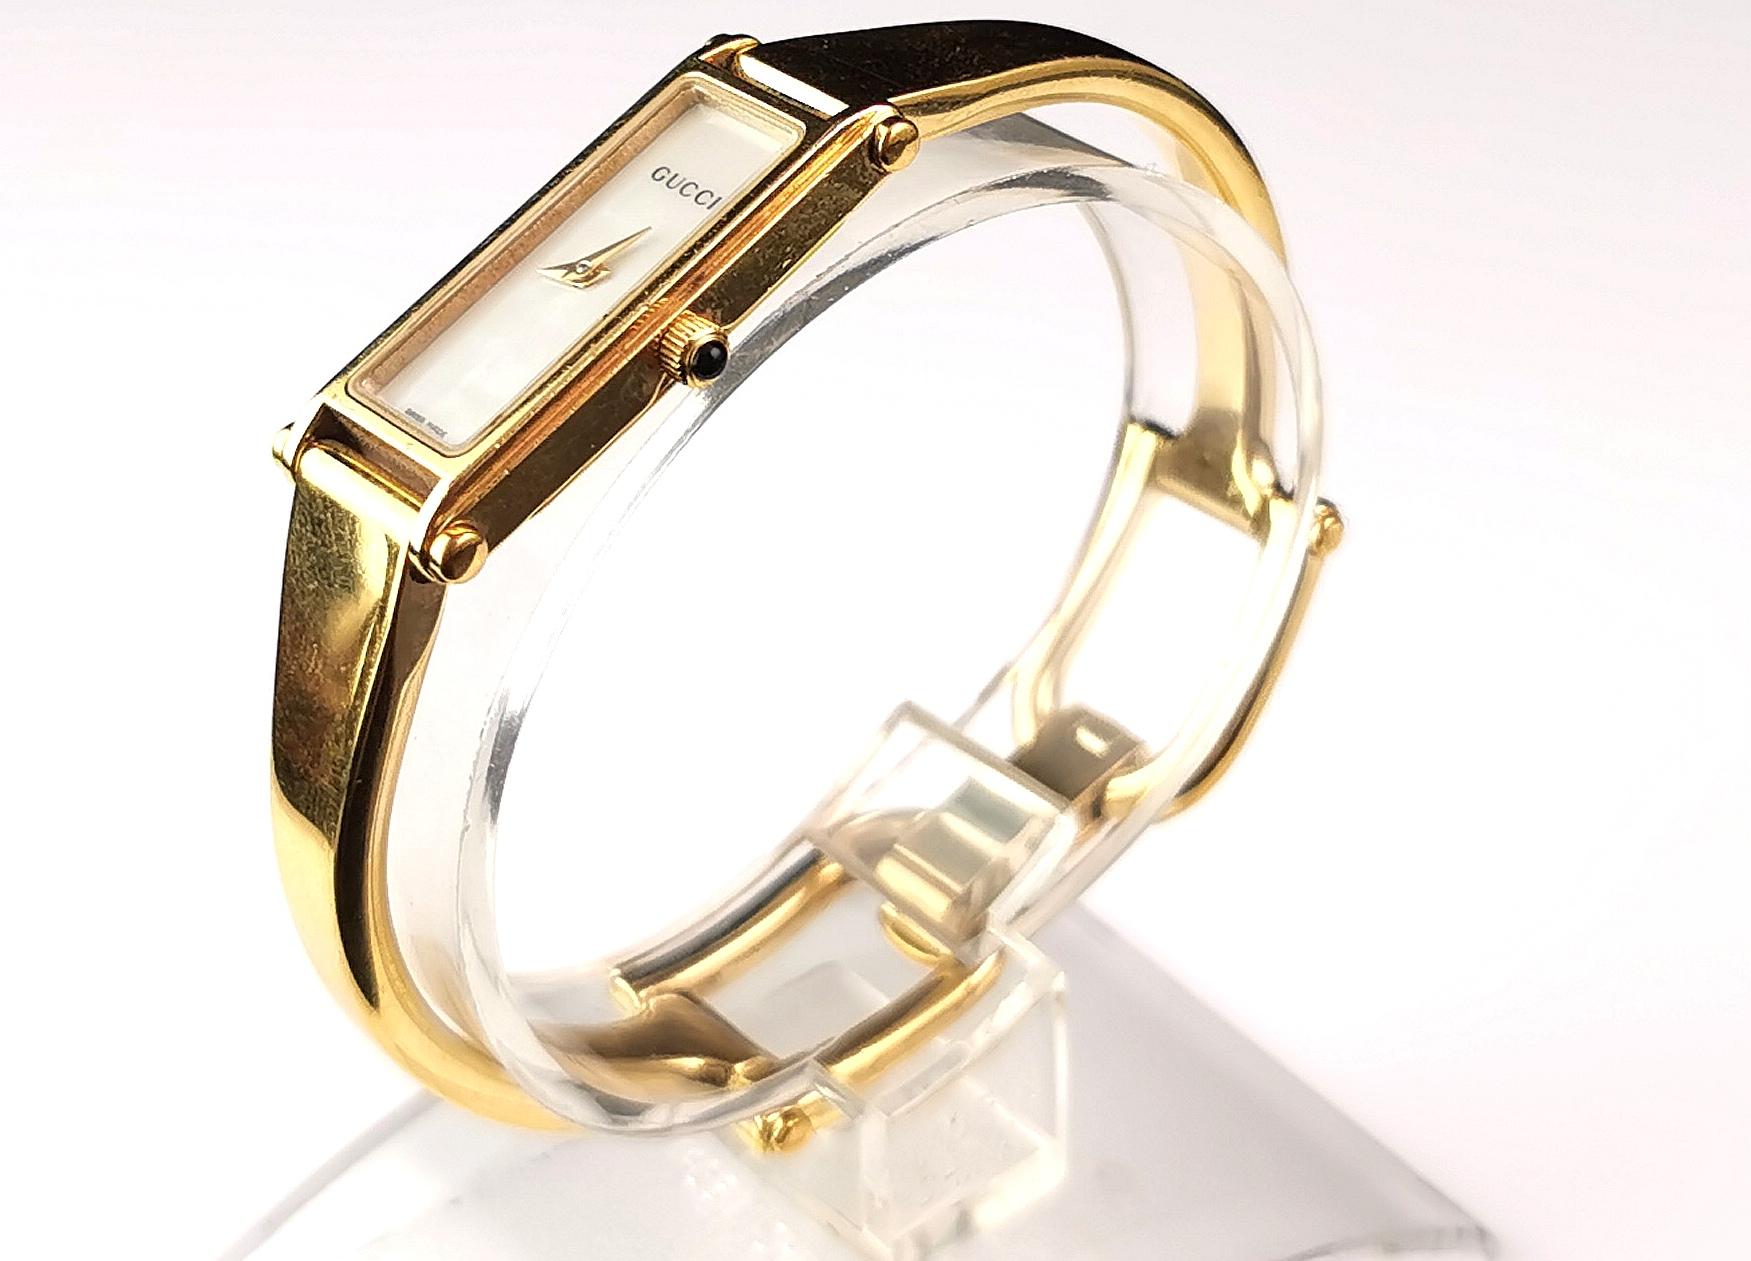 Vintage Gucci 1500l gold plated ladies wristwatch, Horsebit bangle strap  5